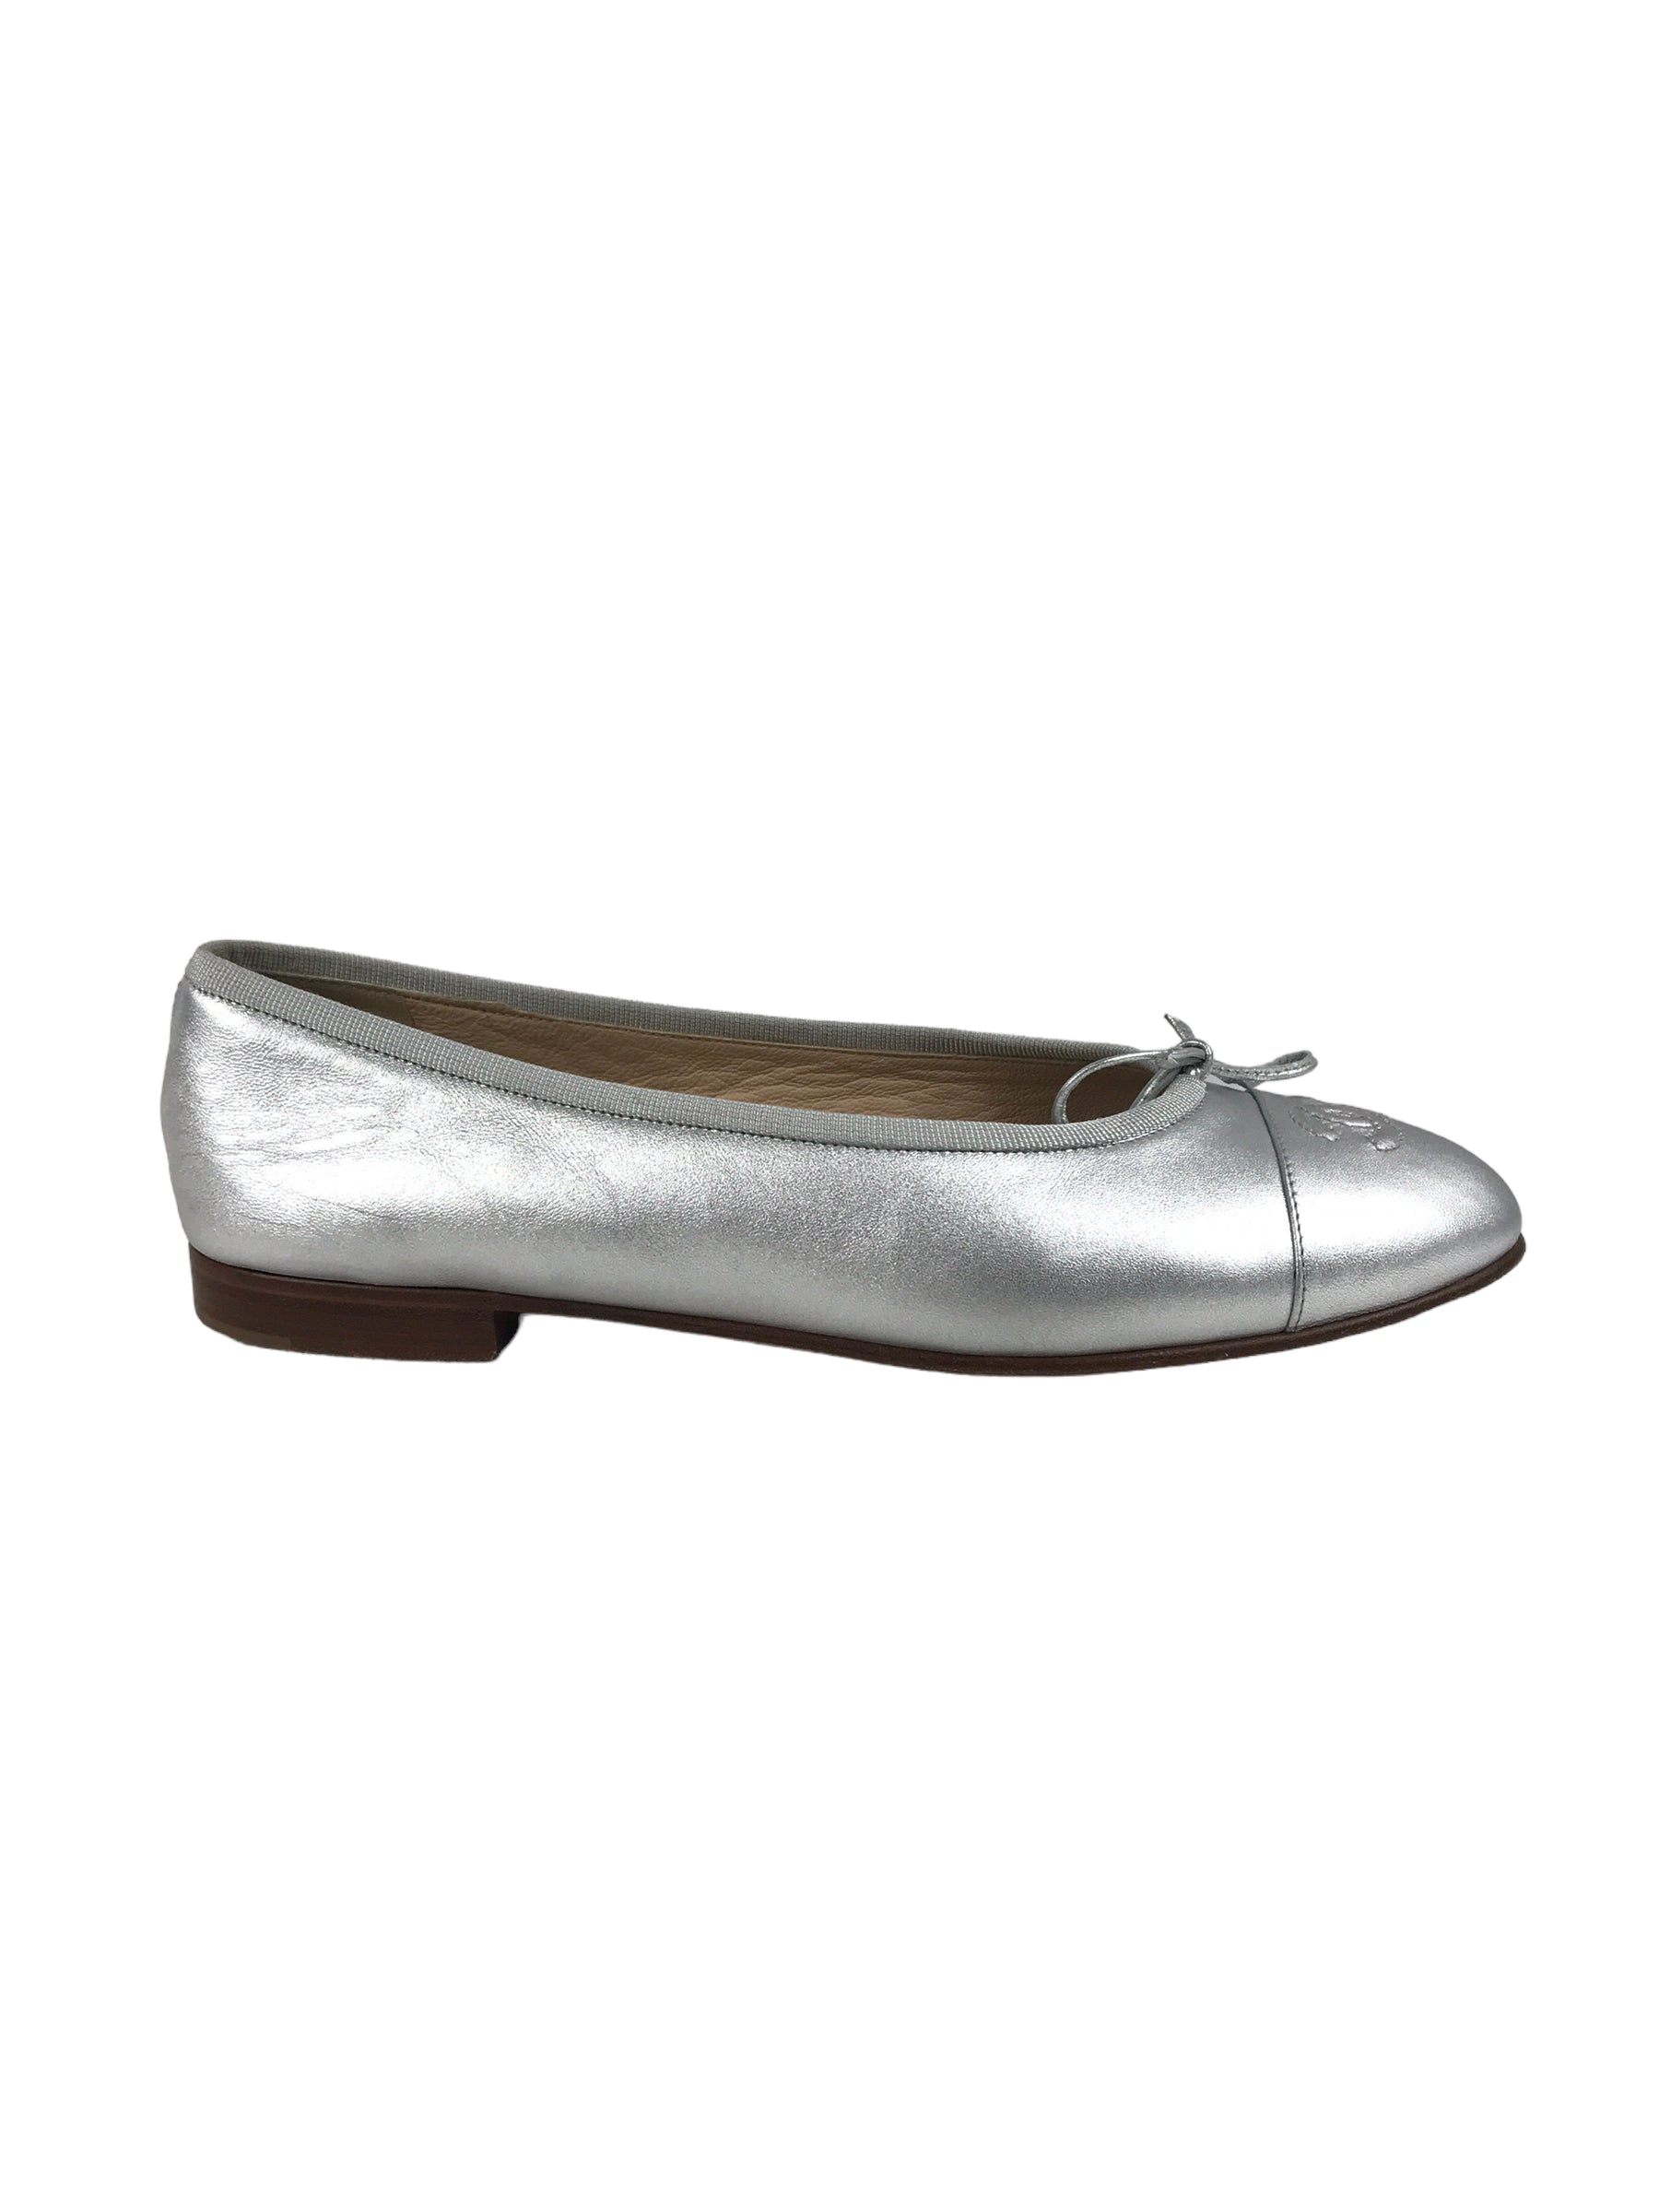 Chanel Silver Metallic Lambskin Ballet Flats